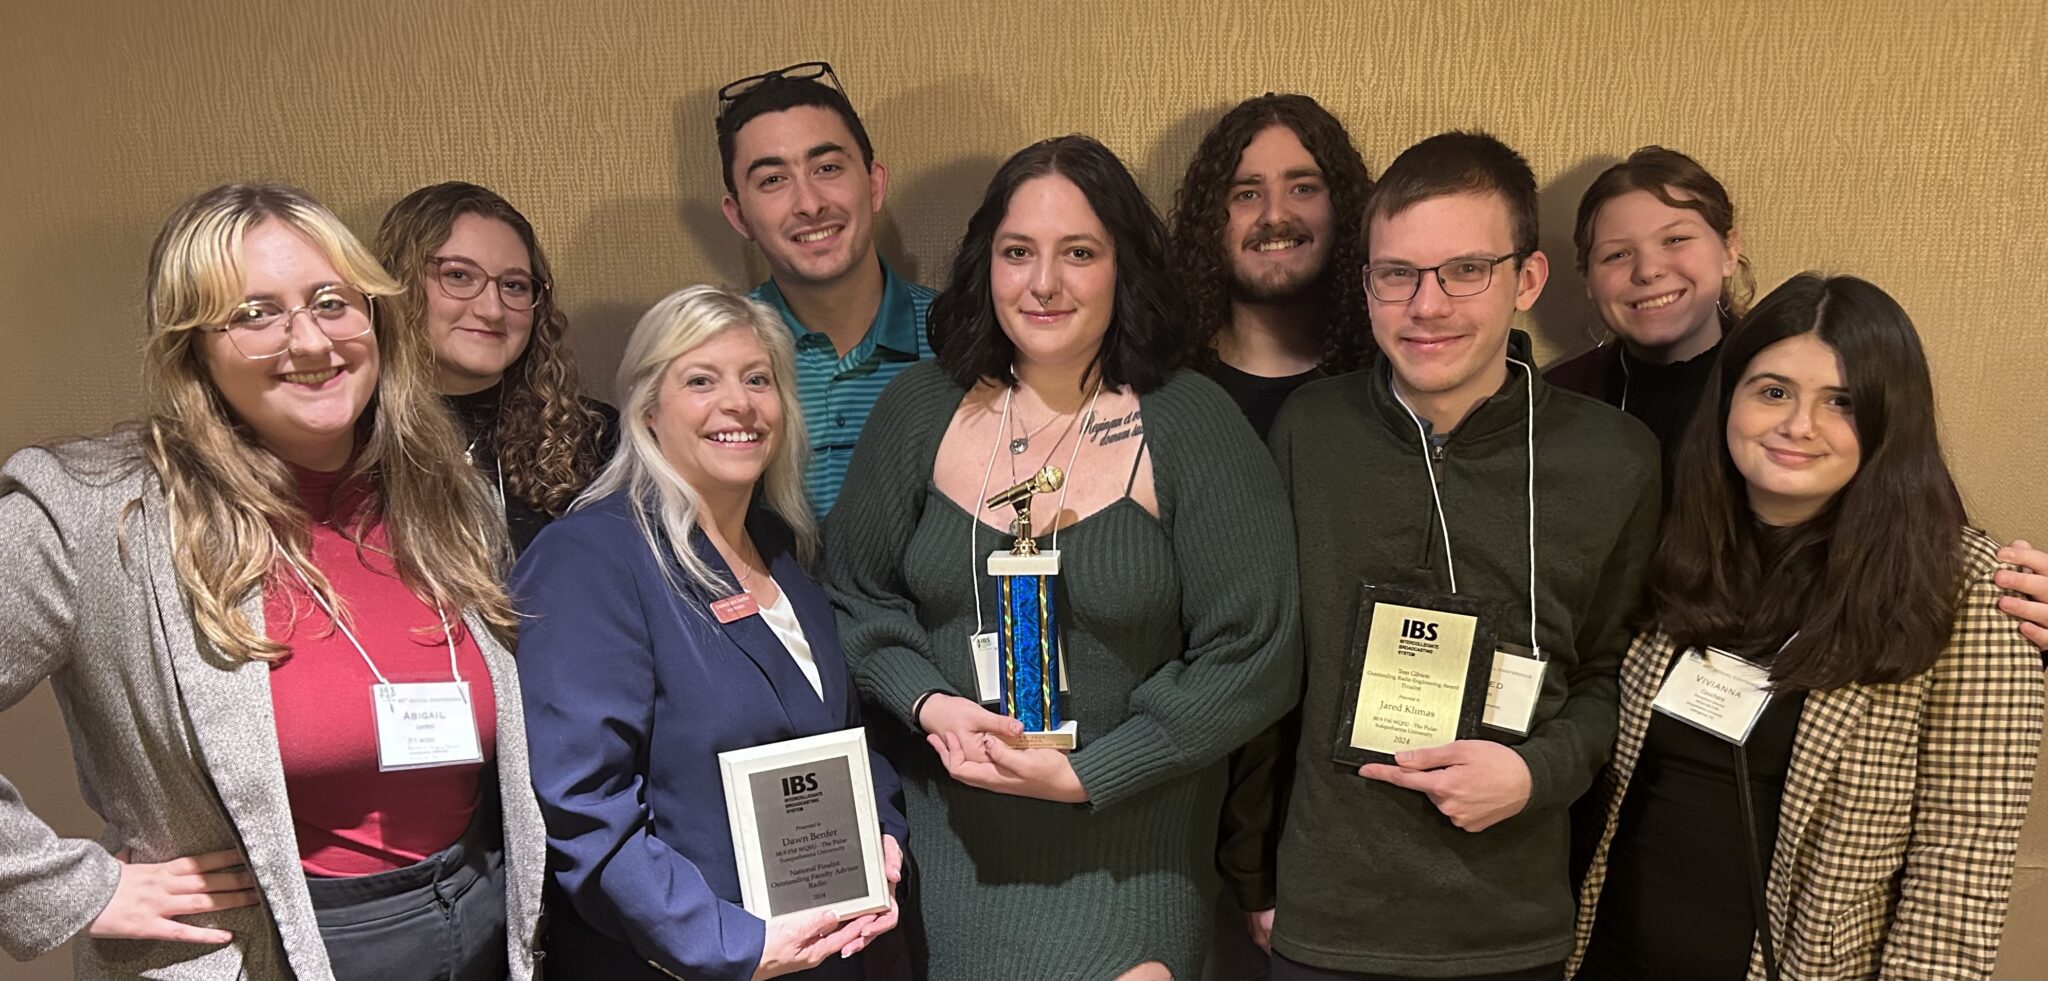 Station Spotlight – WQSU Wins National College Media Award